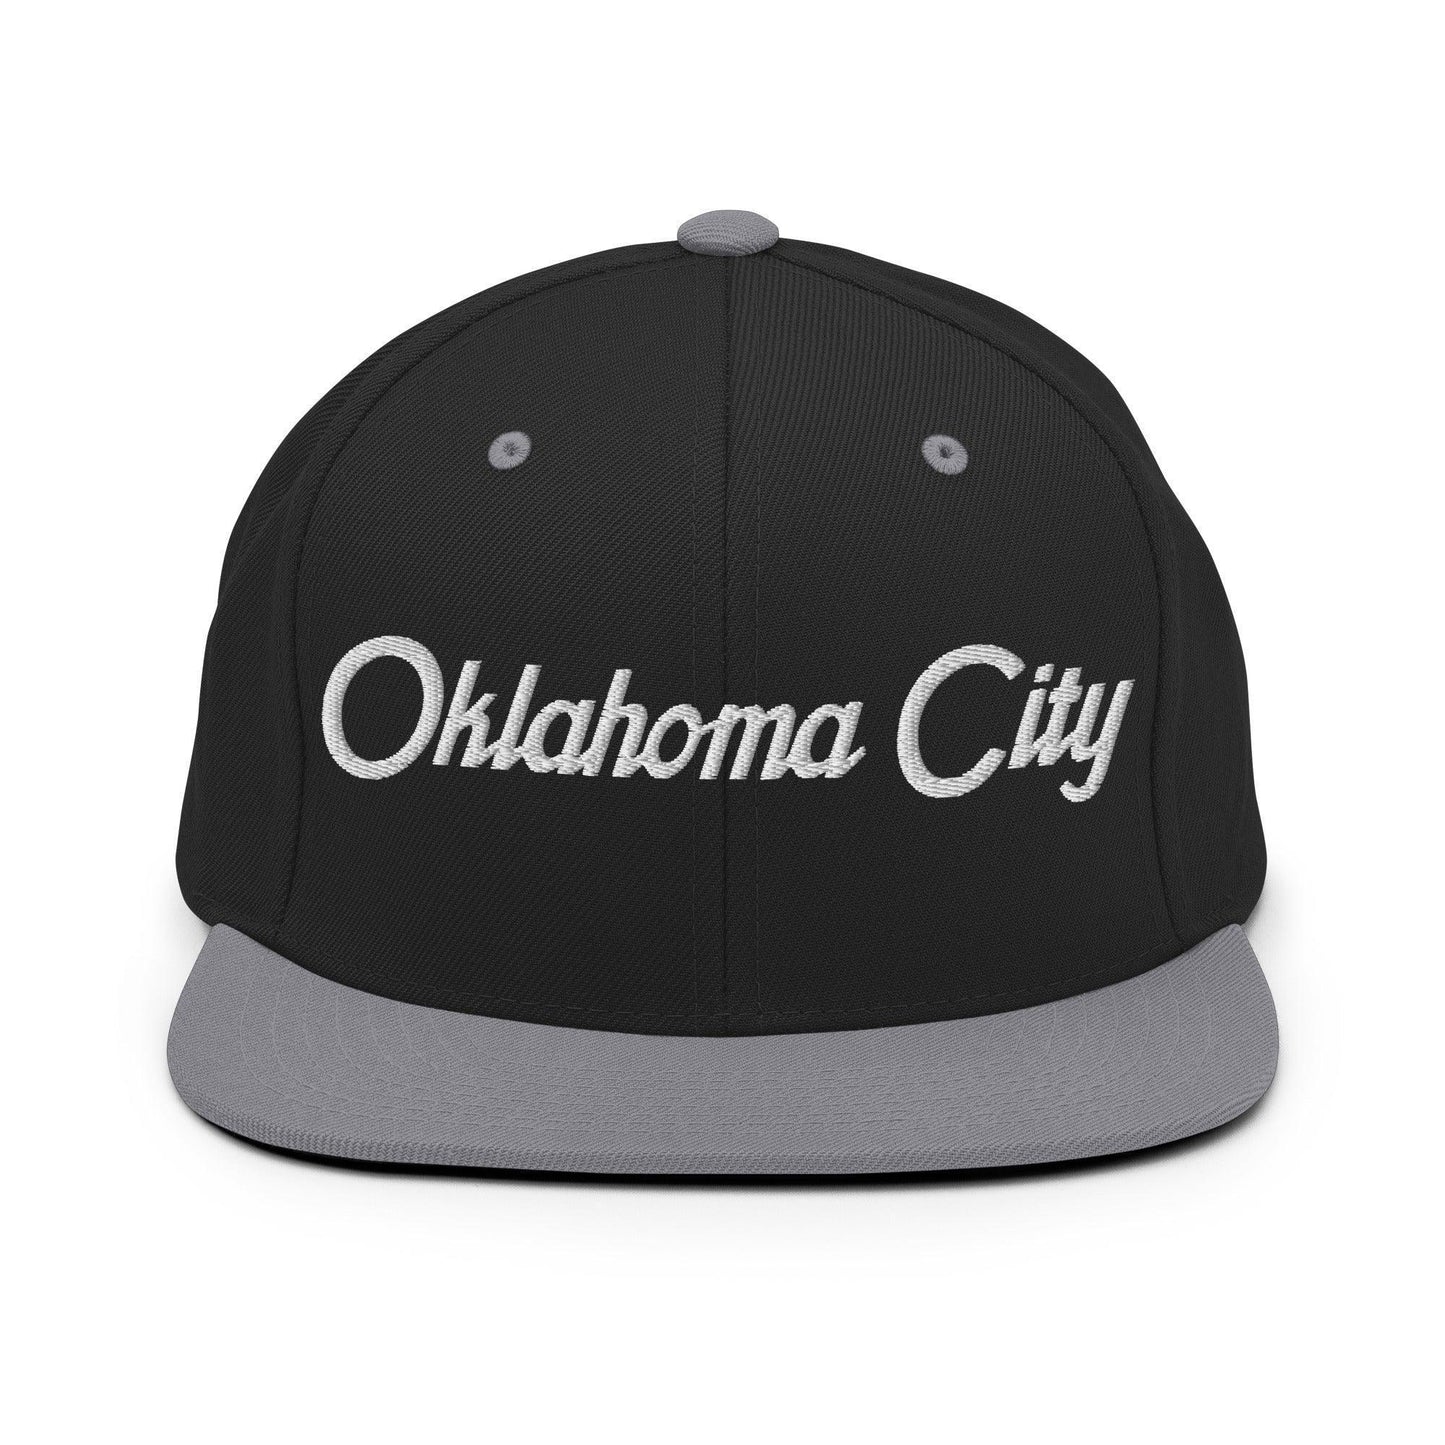 Oklahoma City Script Snapback Hat Black Silver